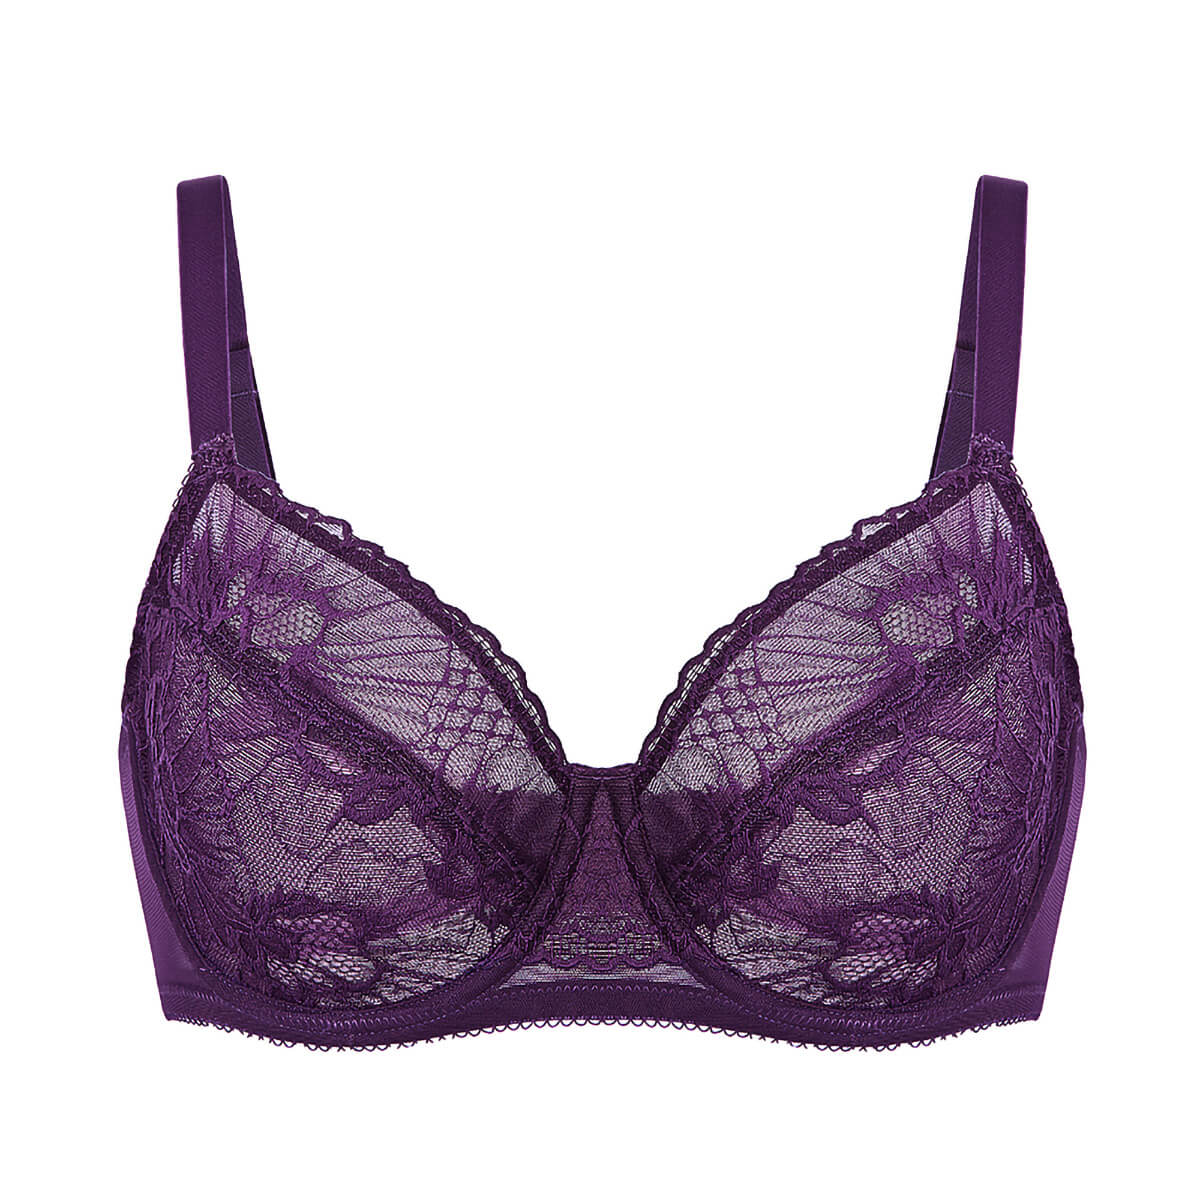 Minimizer soft bra in floral pattern - Purple Orchid